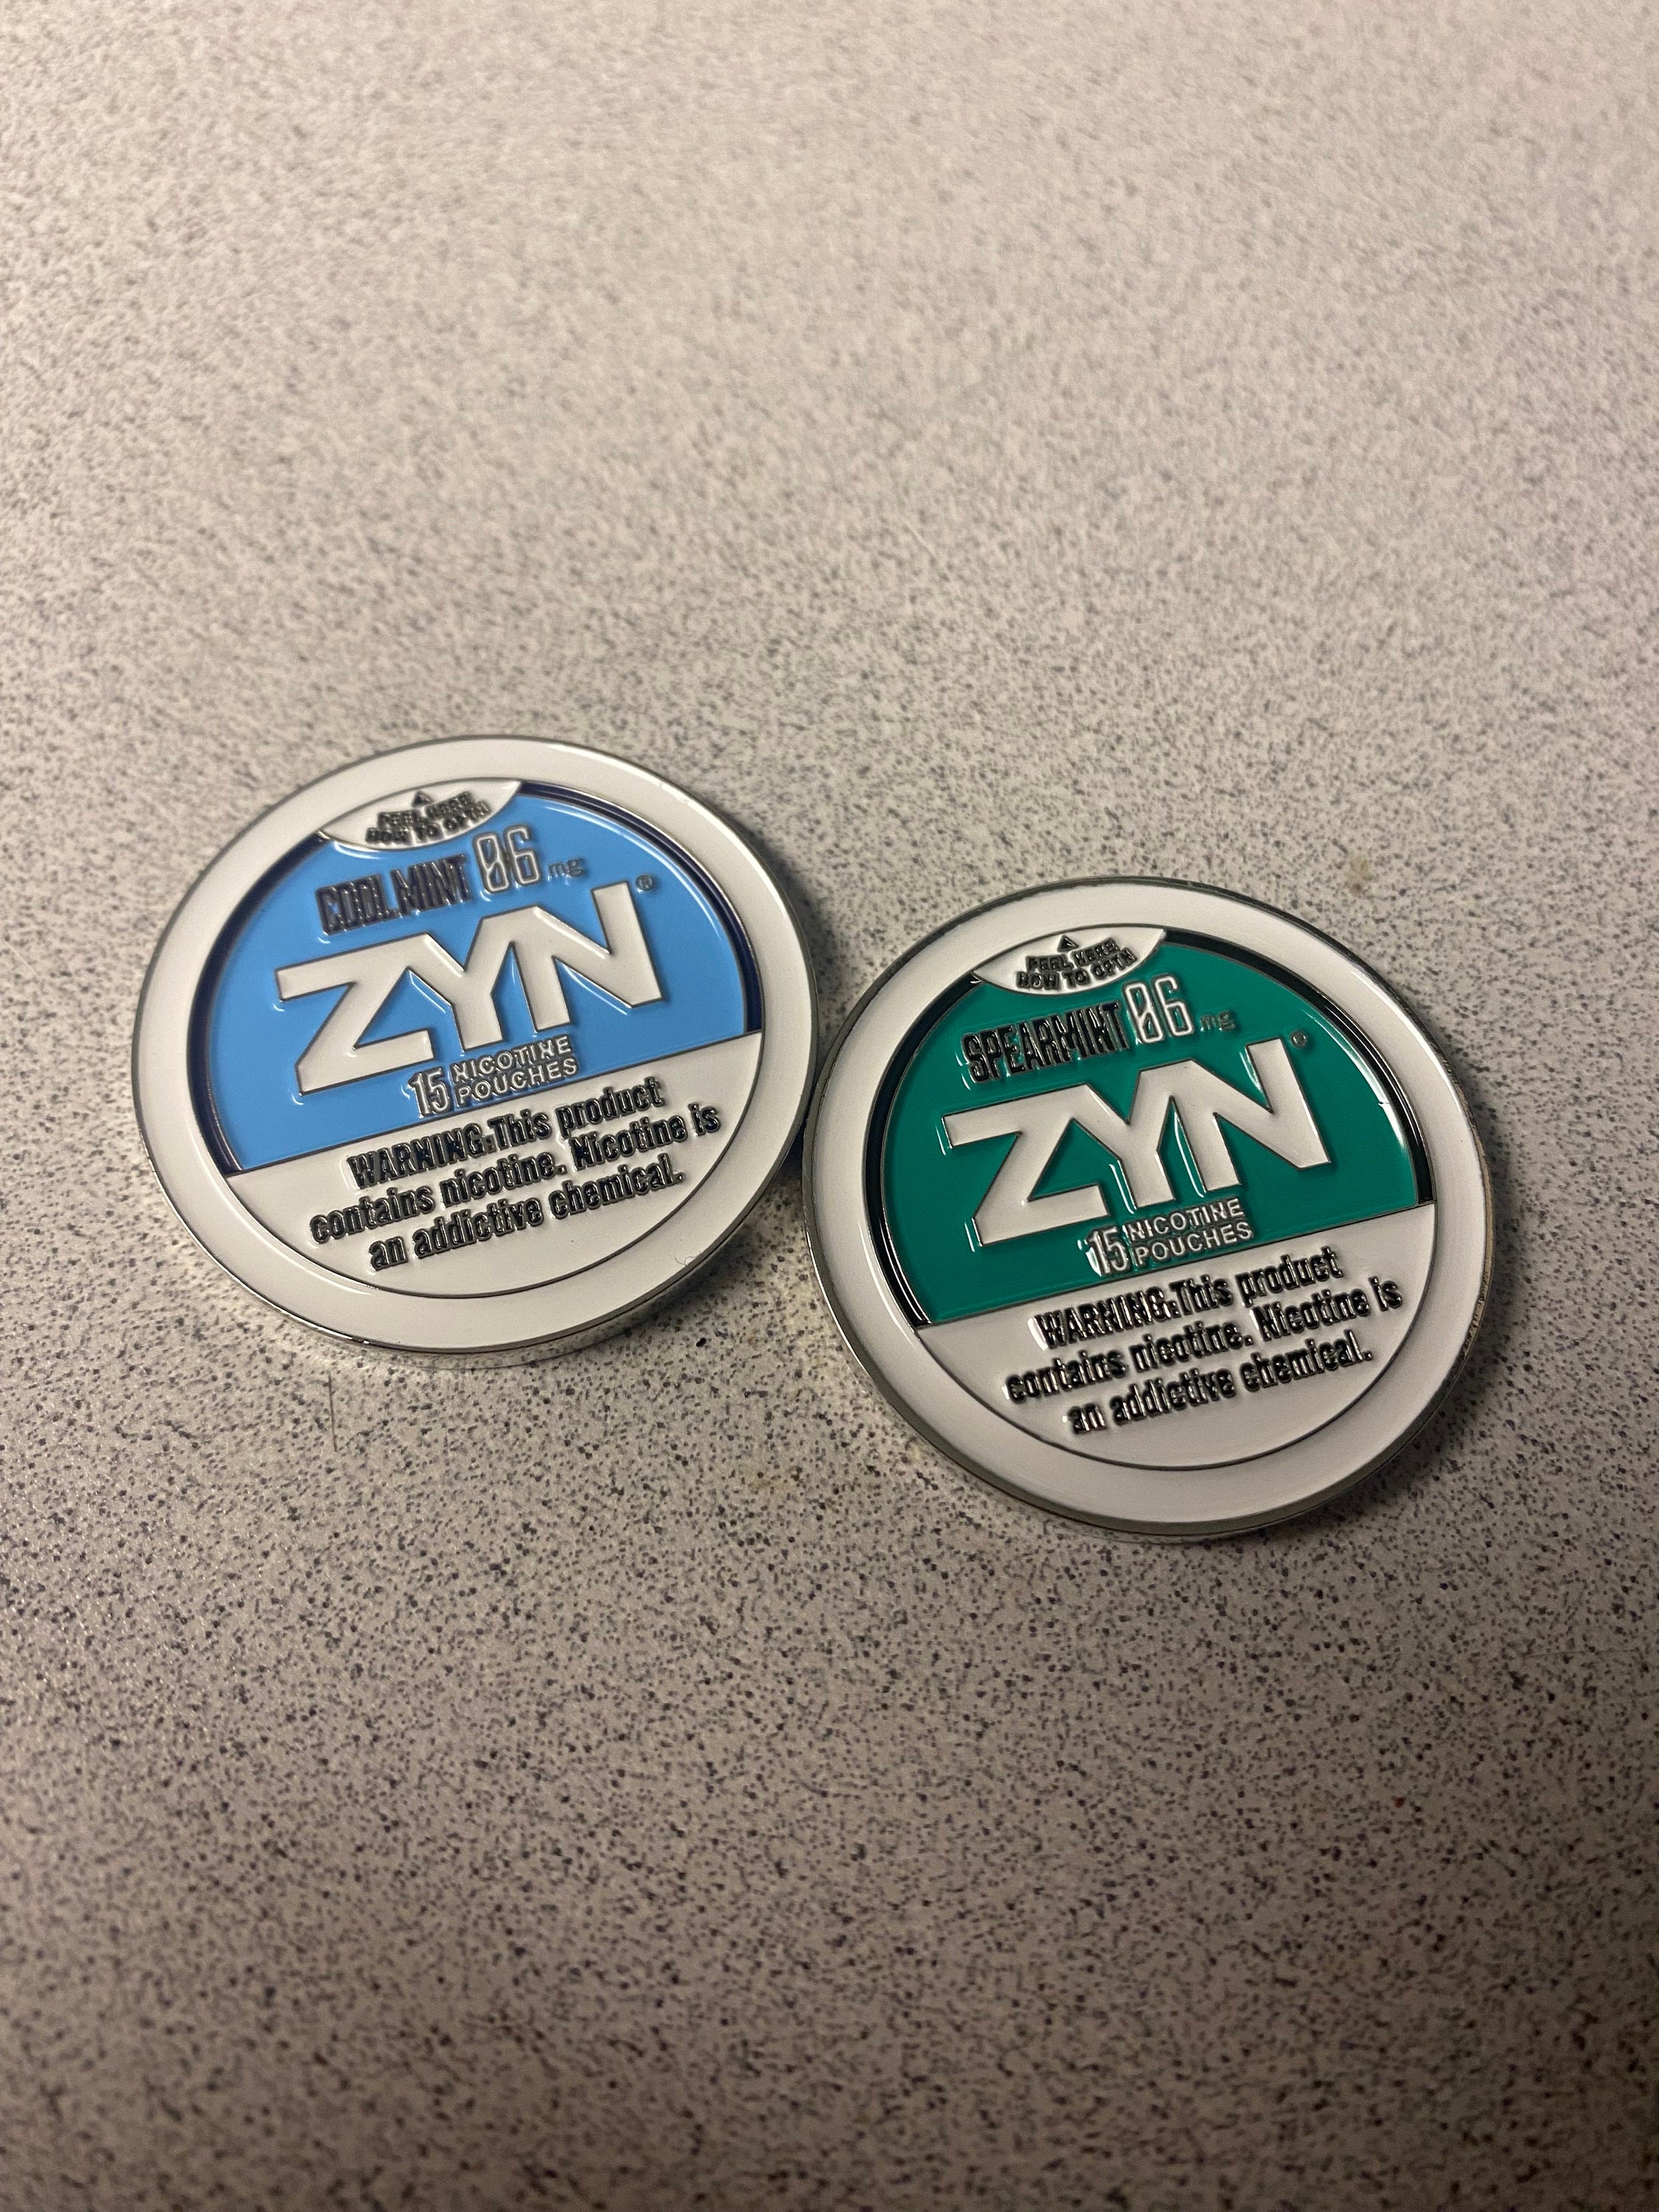  Metal Zyn Can, Zyn Holder, Snus Can, Dip Can, Zyn Container, Gift For Zyn User, Gift For Snus User, Gift For Him